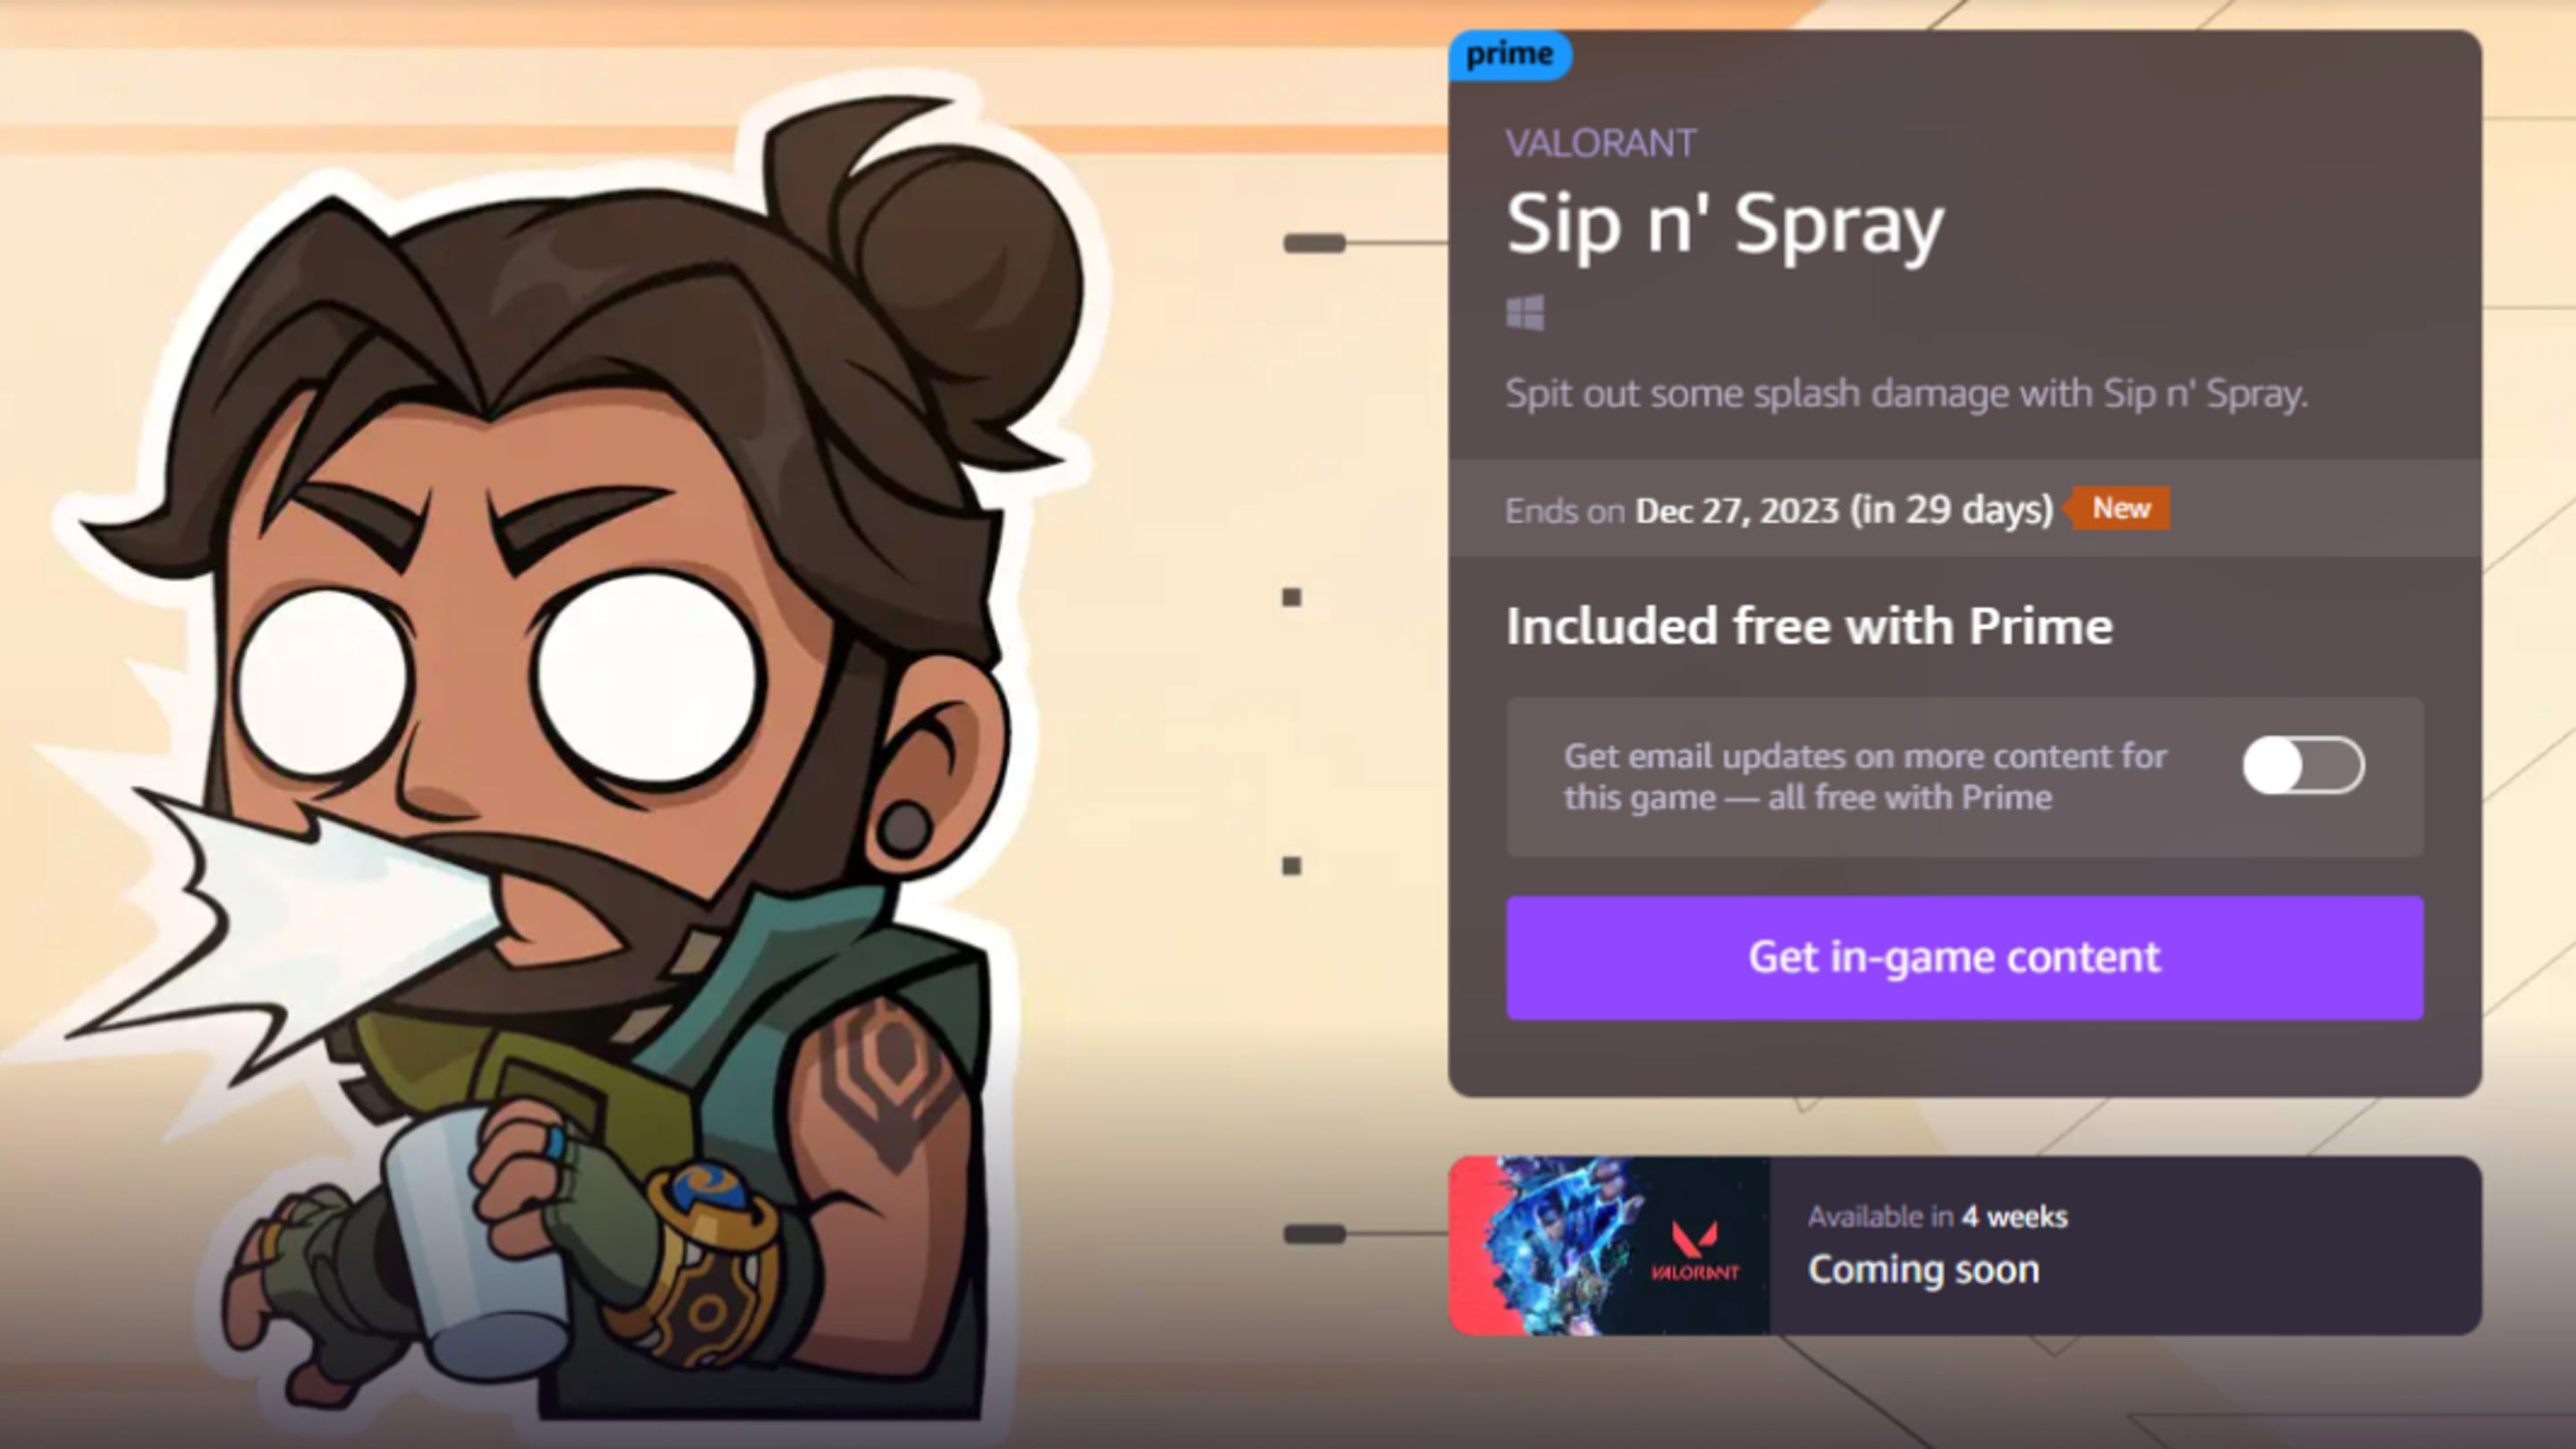 VALORANT Prime Gaming Rewards: Sip n' Spray (December 2023